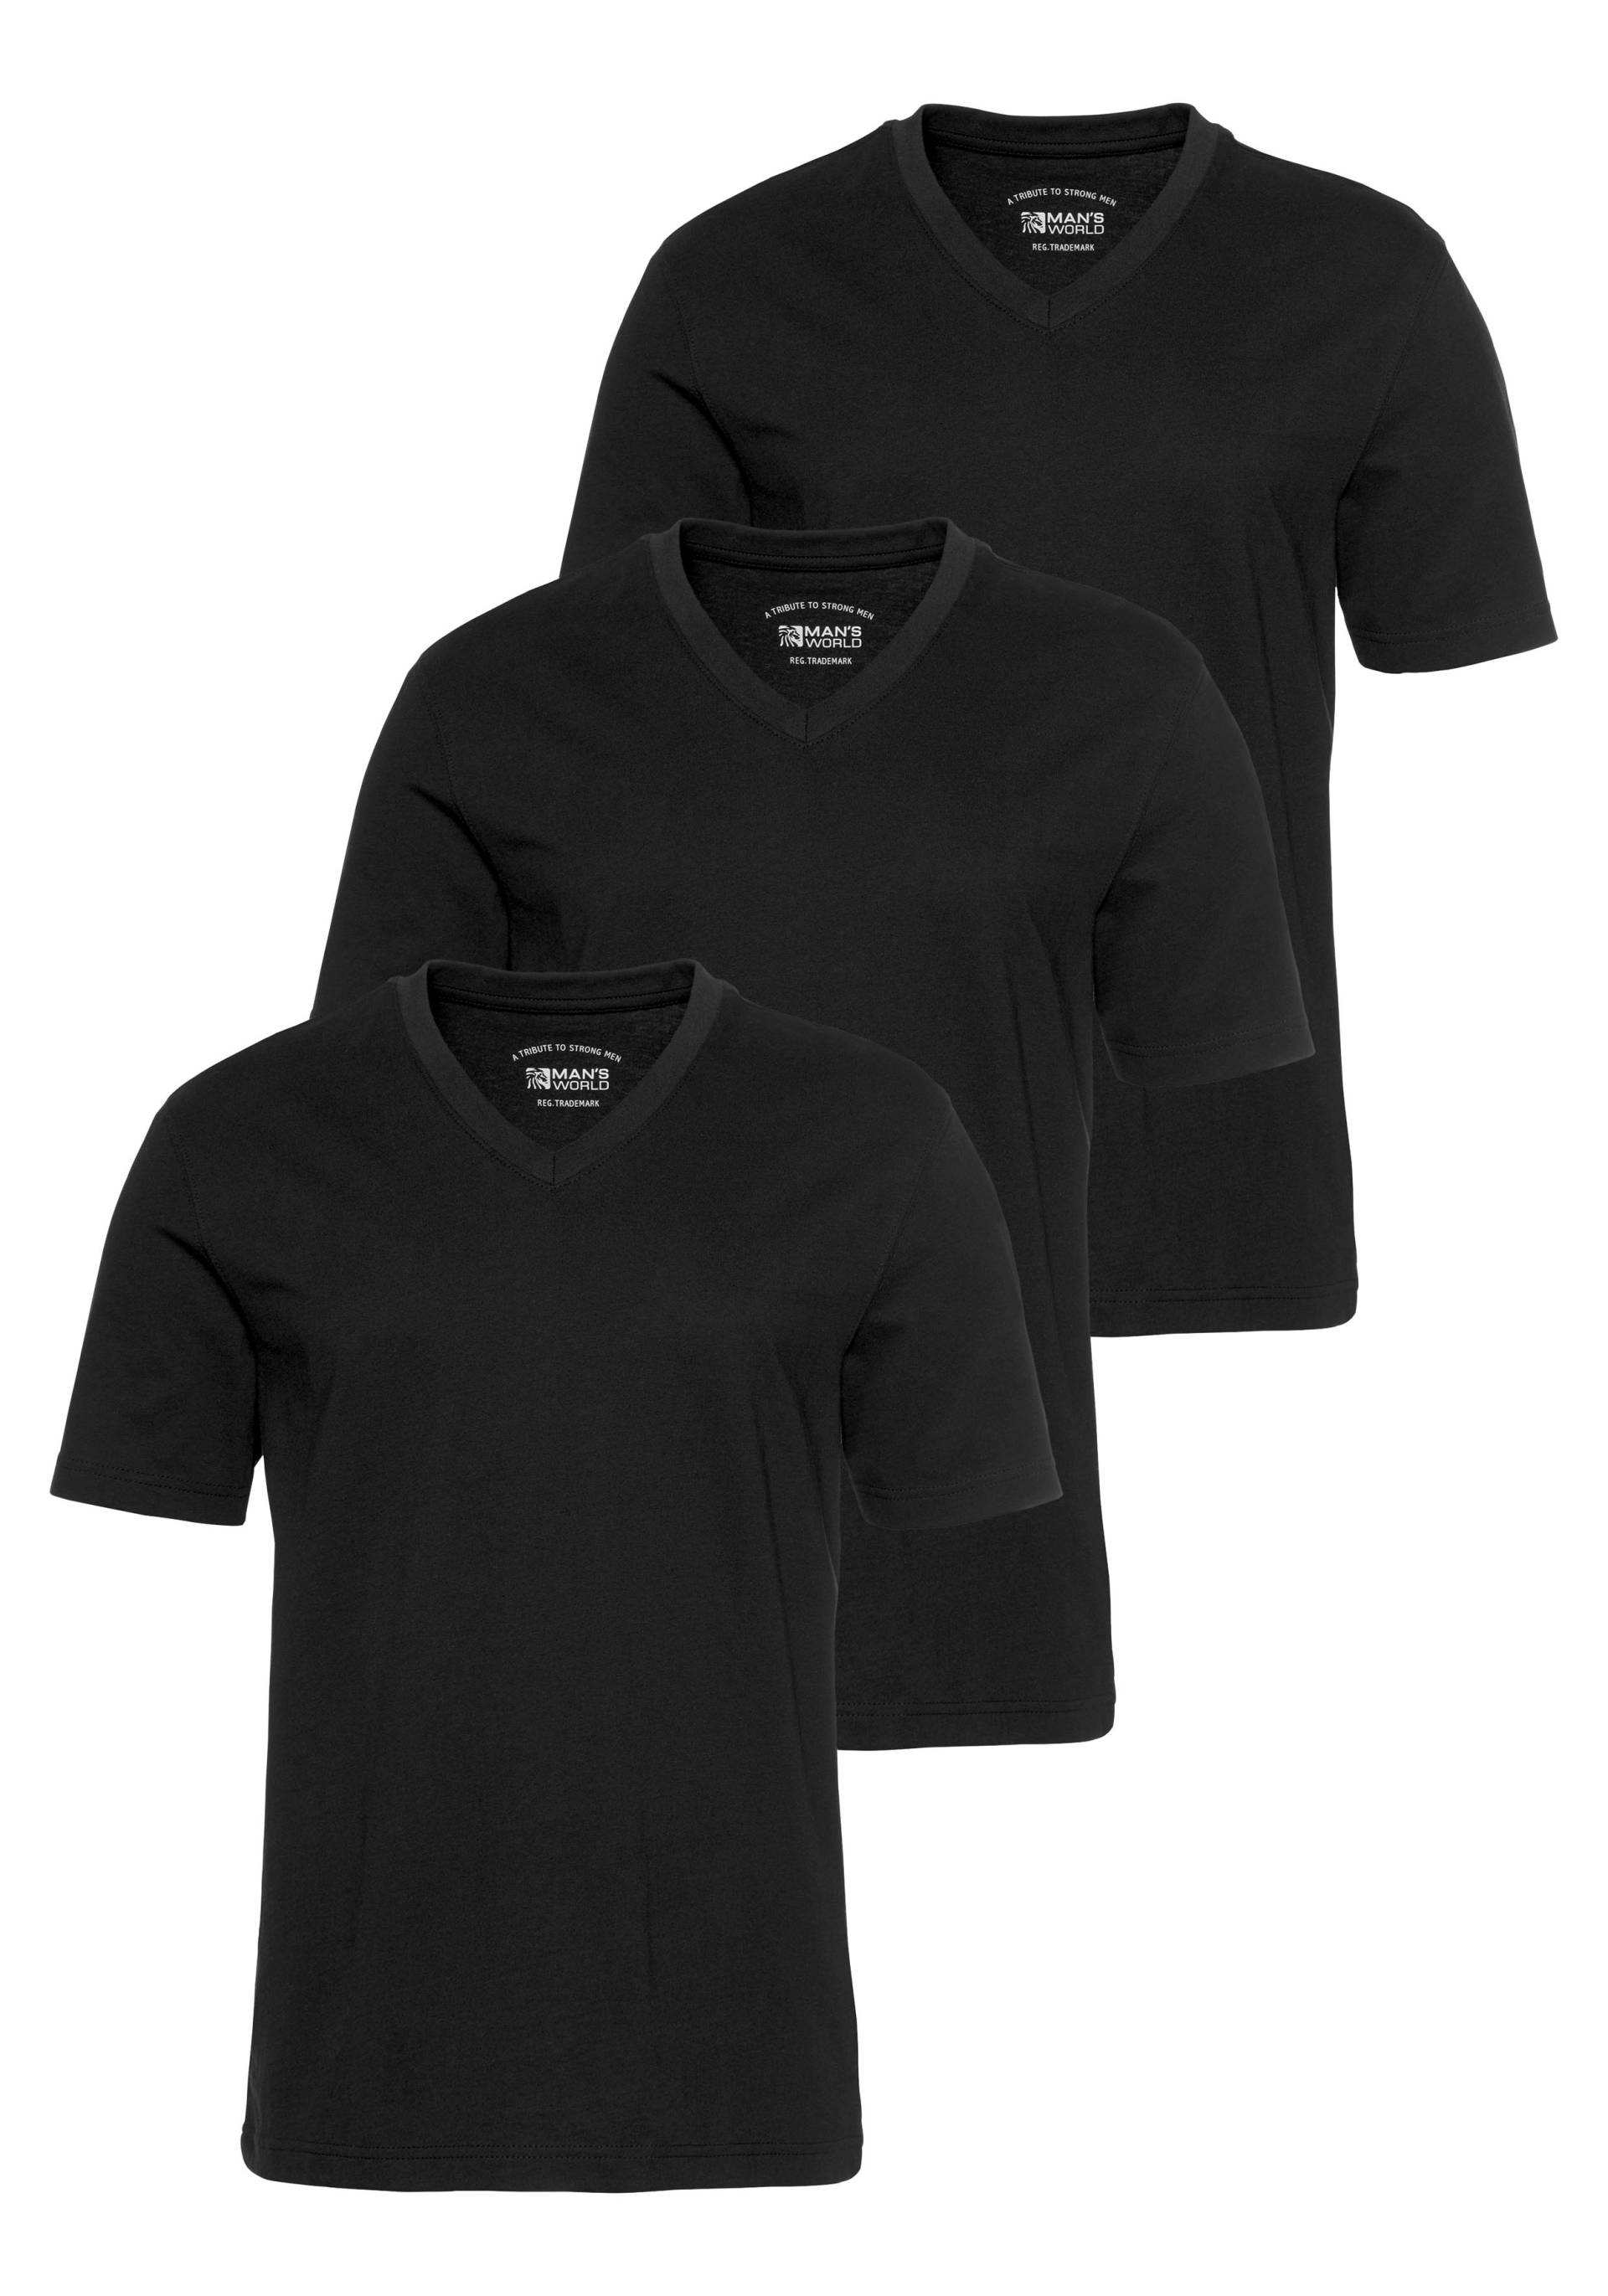 Man's World V-Shirt, (Packung, 3 tlg., 3er-Pack), perfekt als Unterzieh T-shirt von Man's World